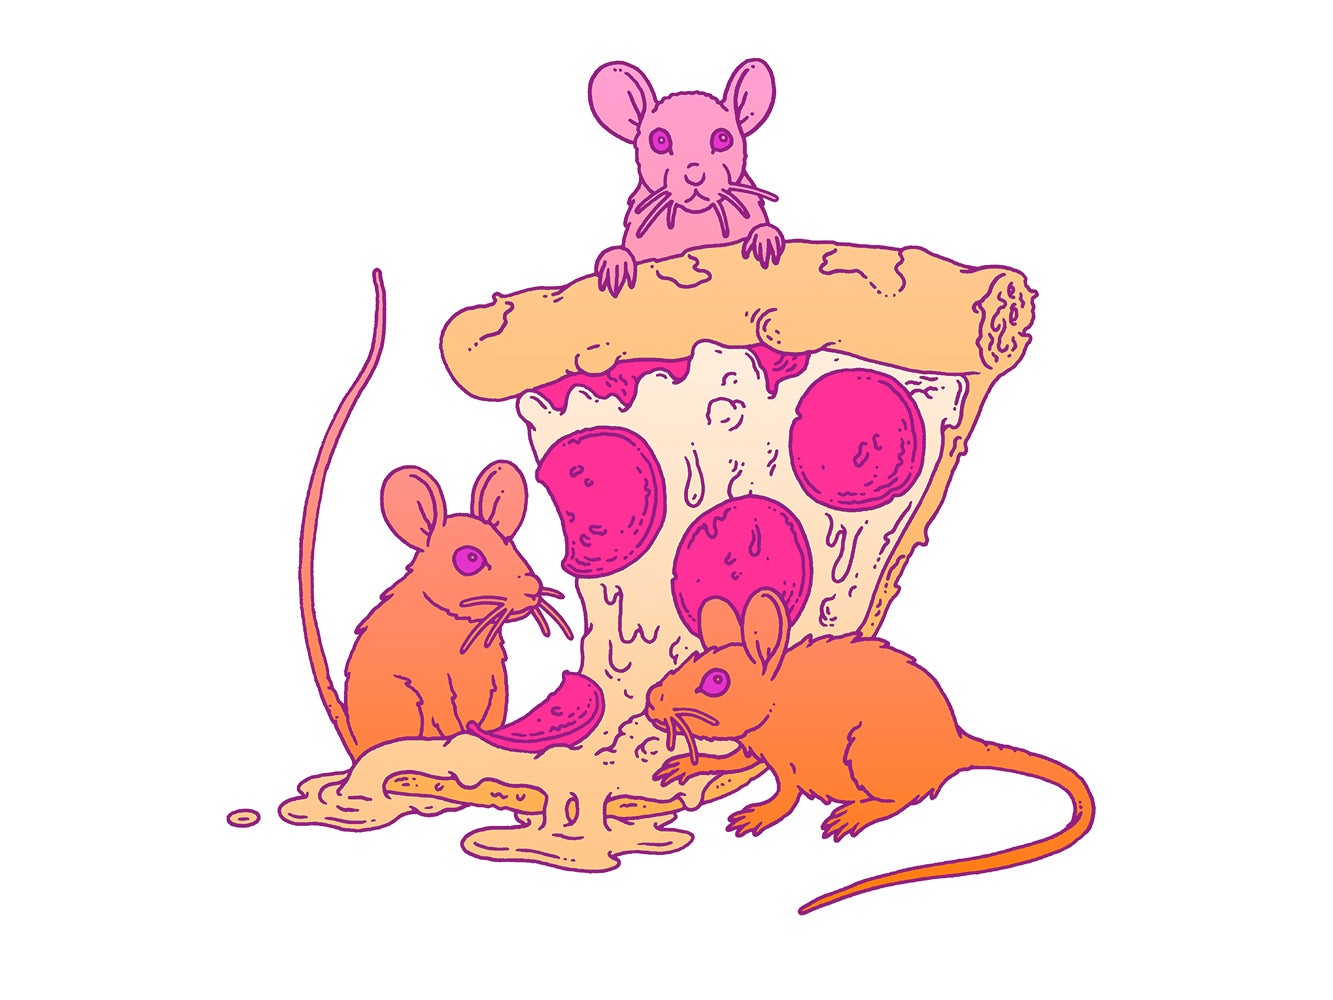 Illustration of pizza mice